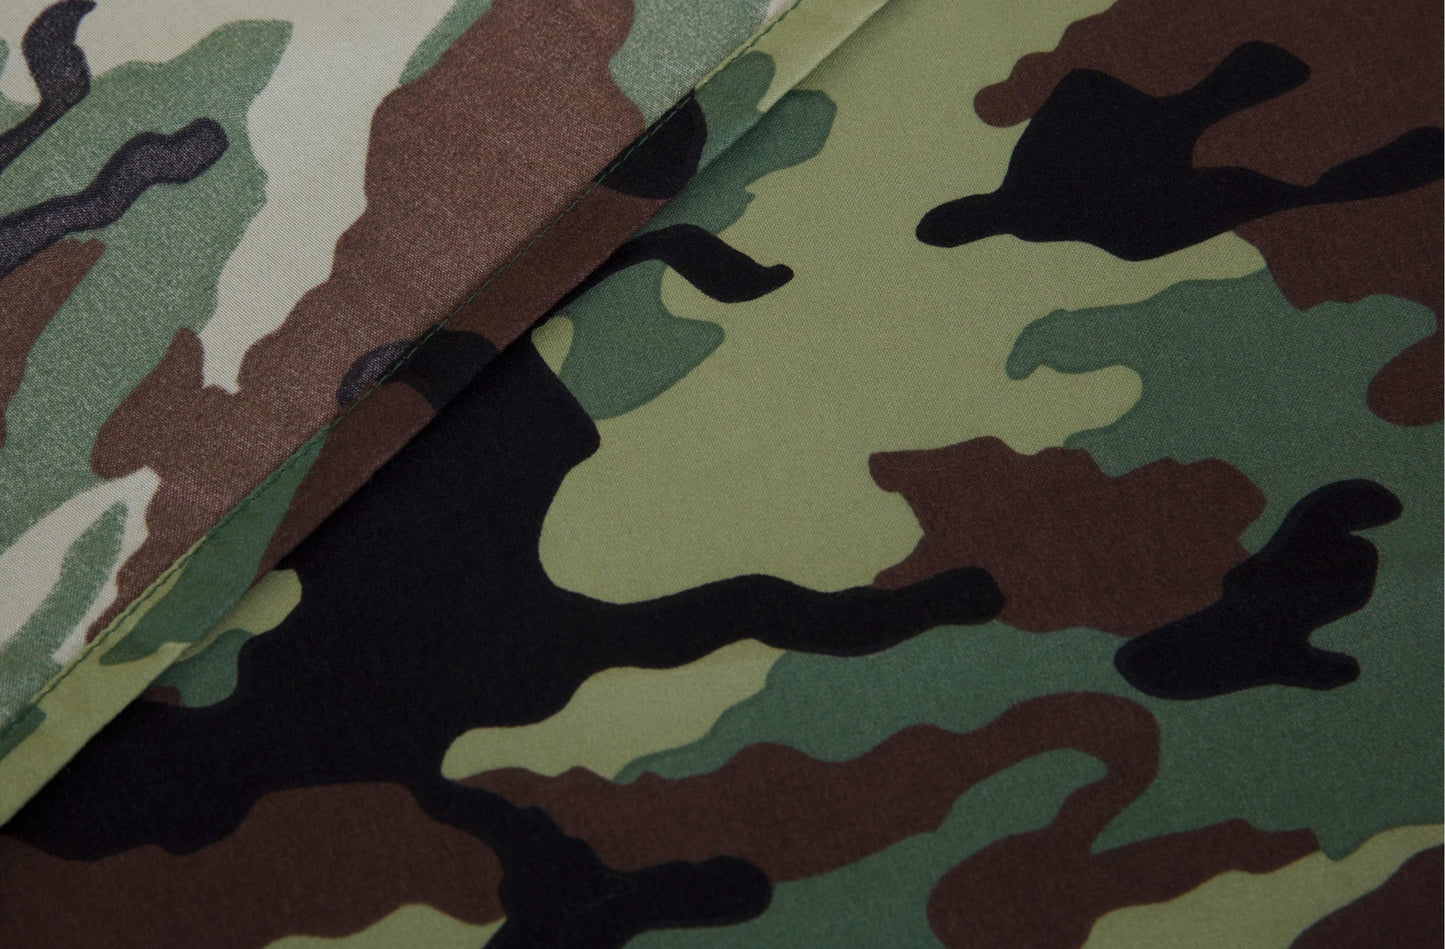 Military Camouflage Pattern 4-Piece Sheet Set